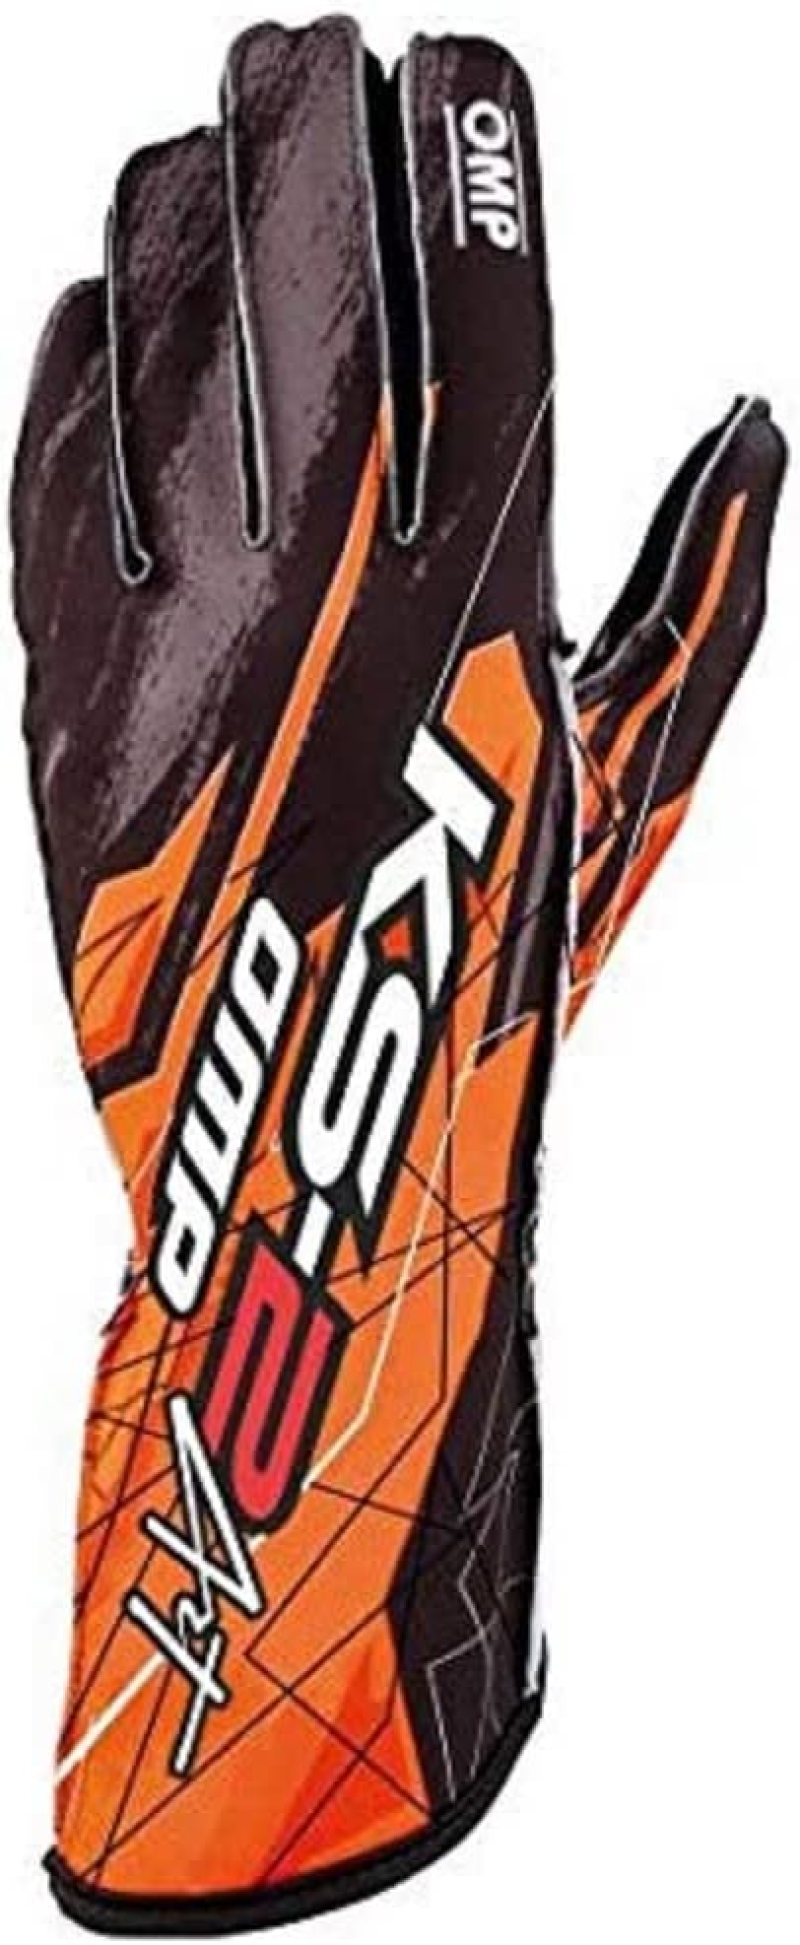 OMP KS-2 Art Gloves Black/Orange - Size S - KB0-2748-A01-179-S